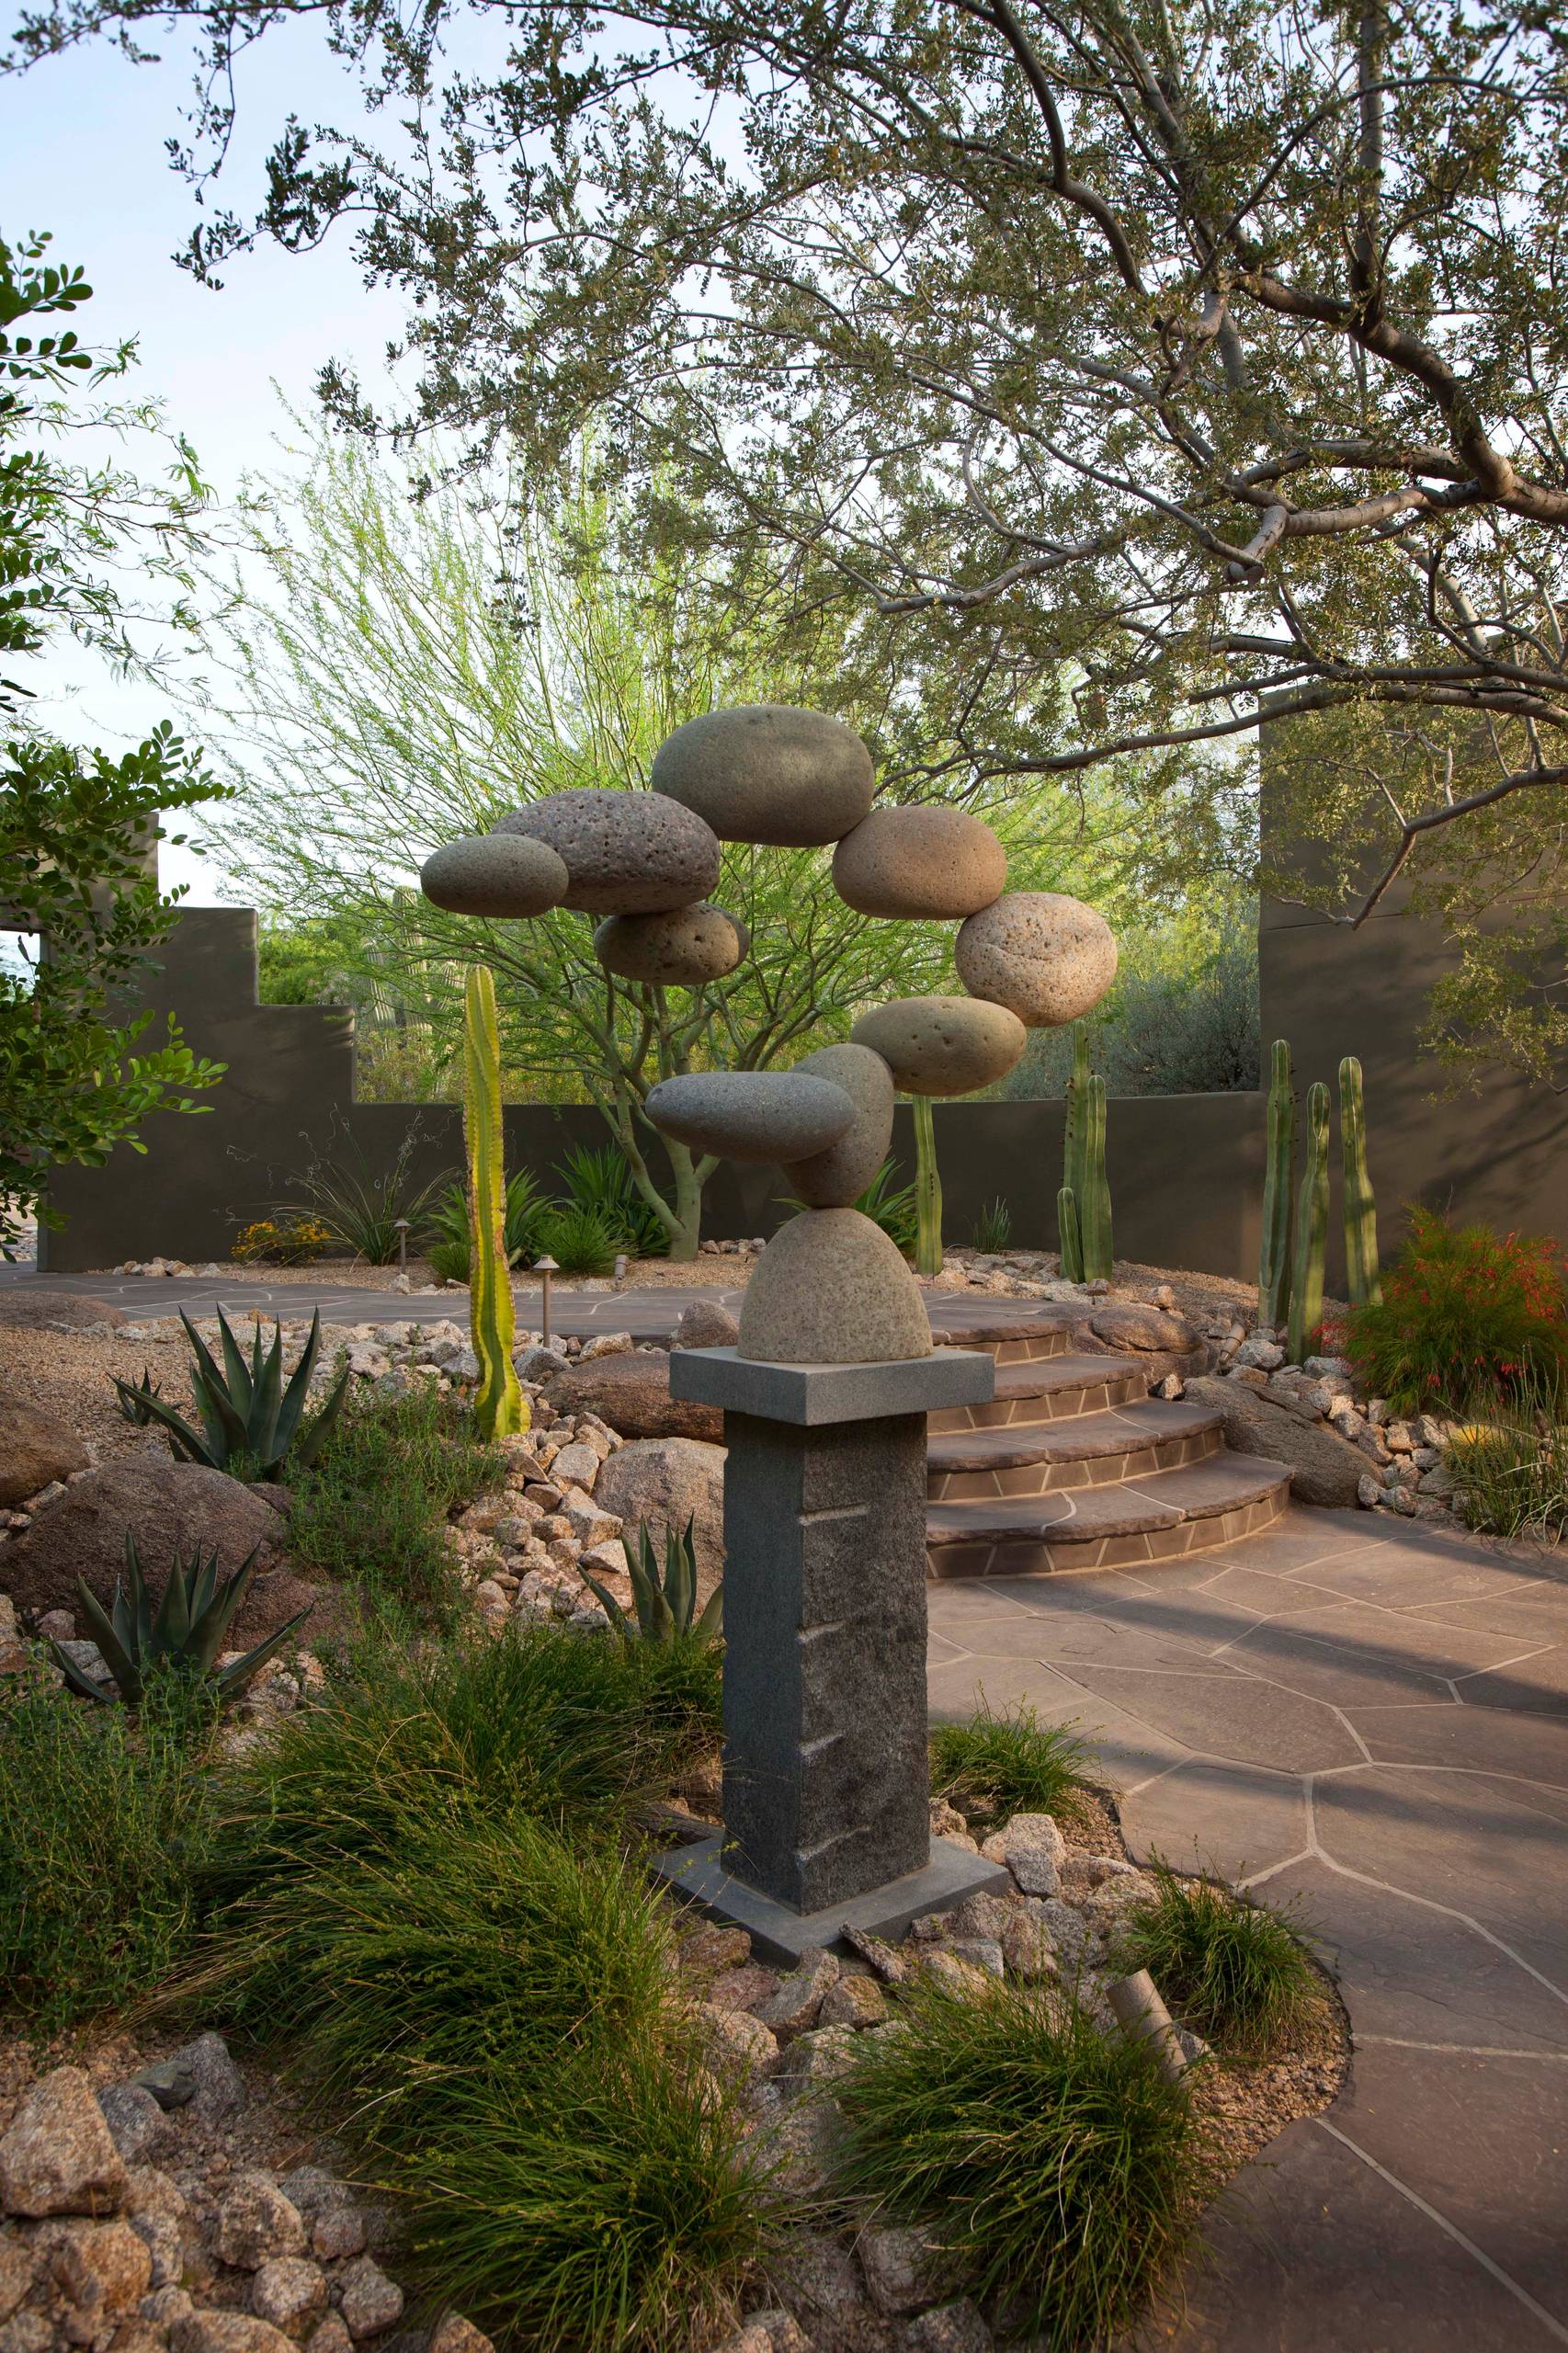 Stone Sculpture Garden - Photos & Ideas | Houzz